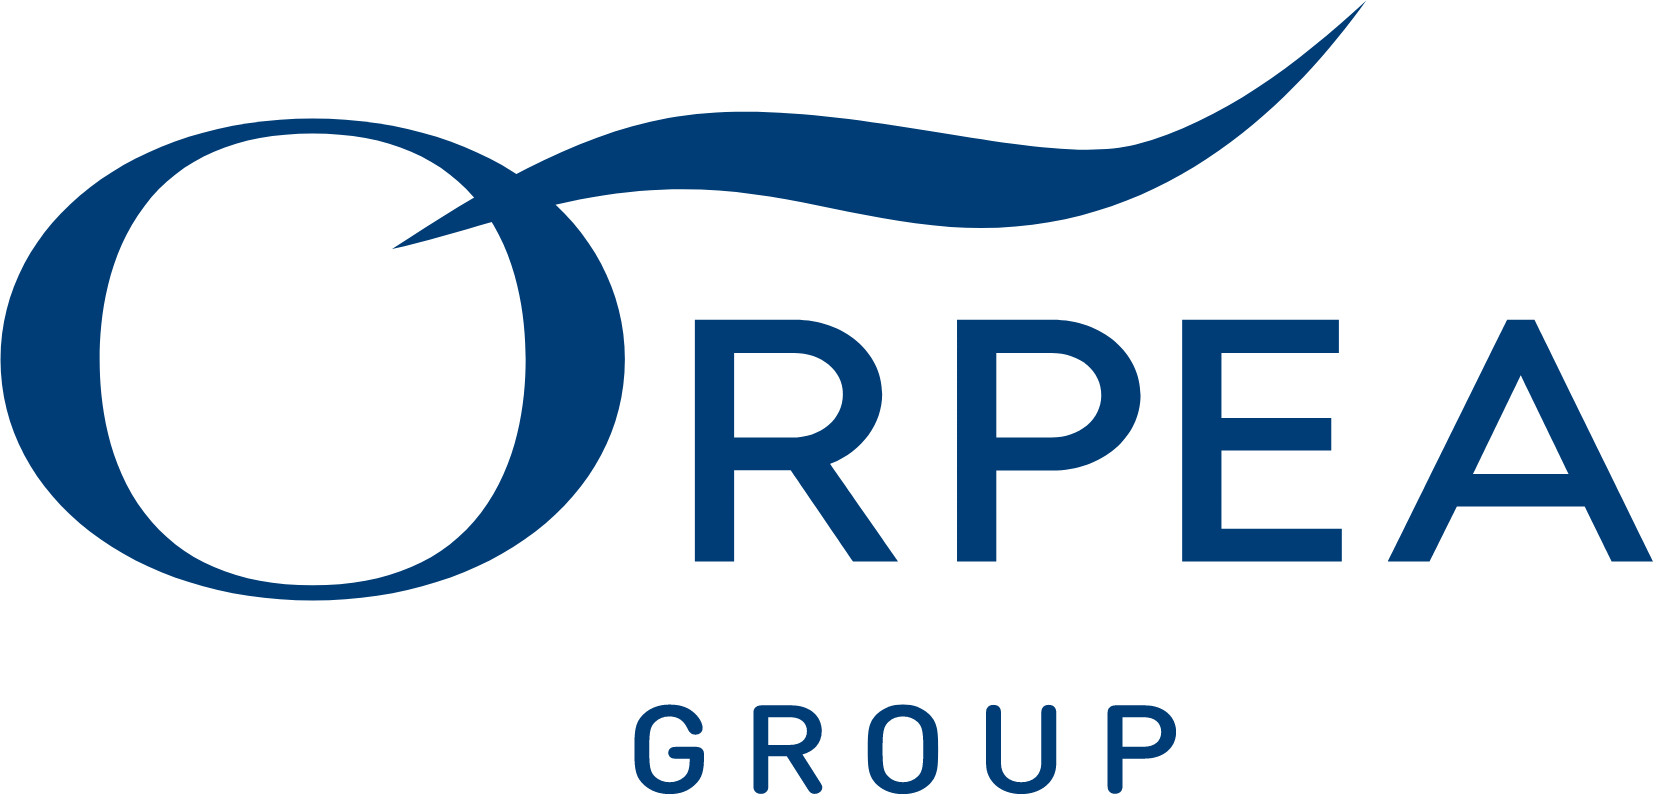 Orpea logo large (transparent PNG)